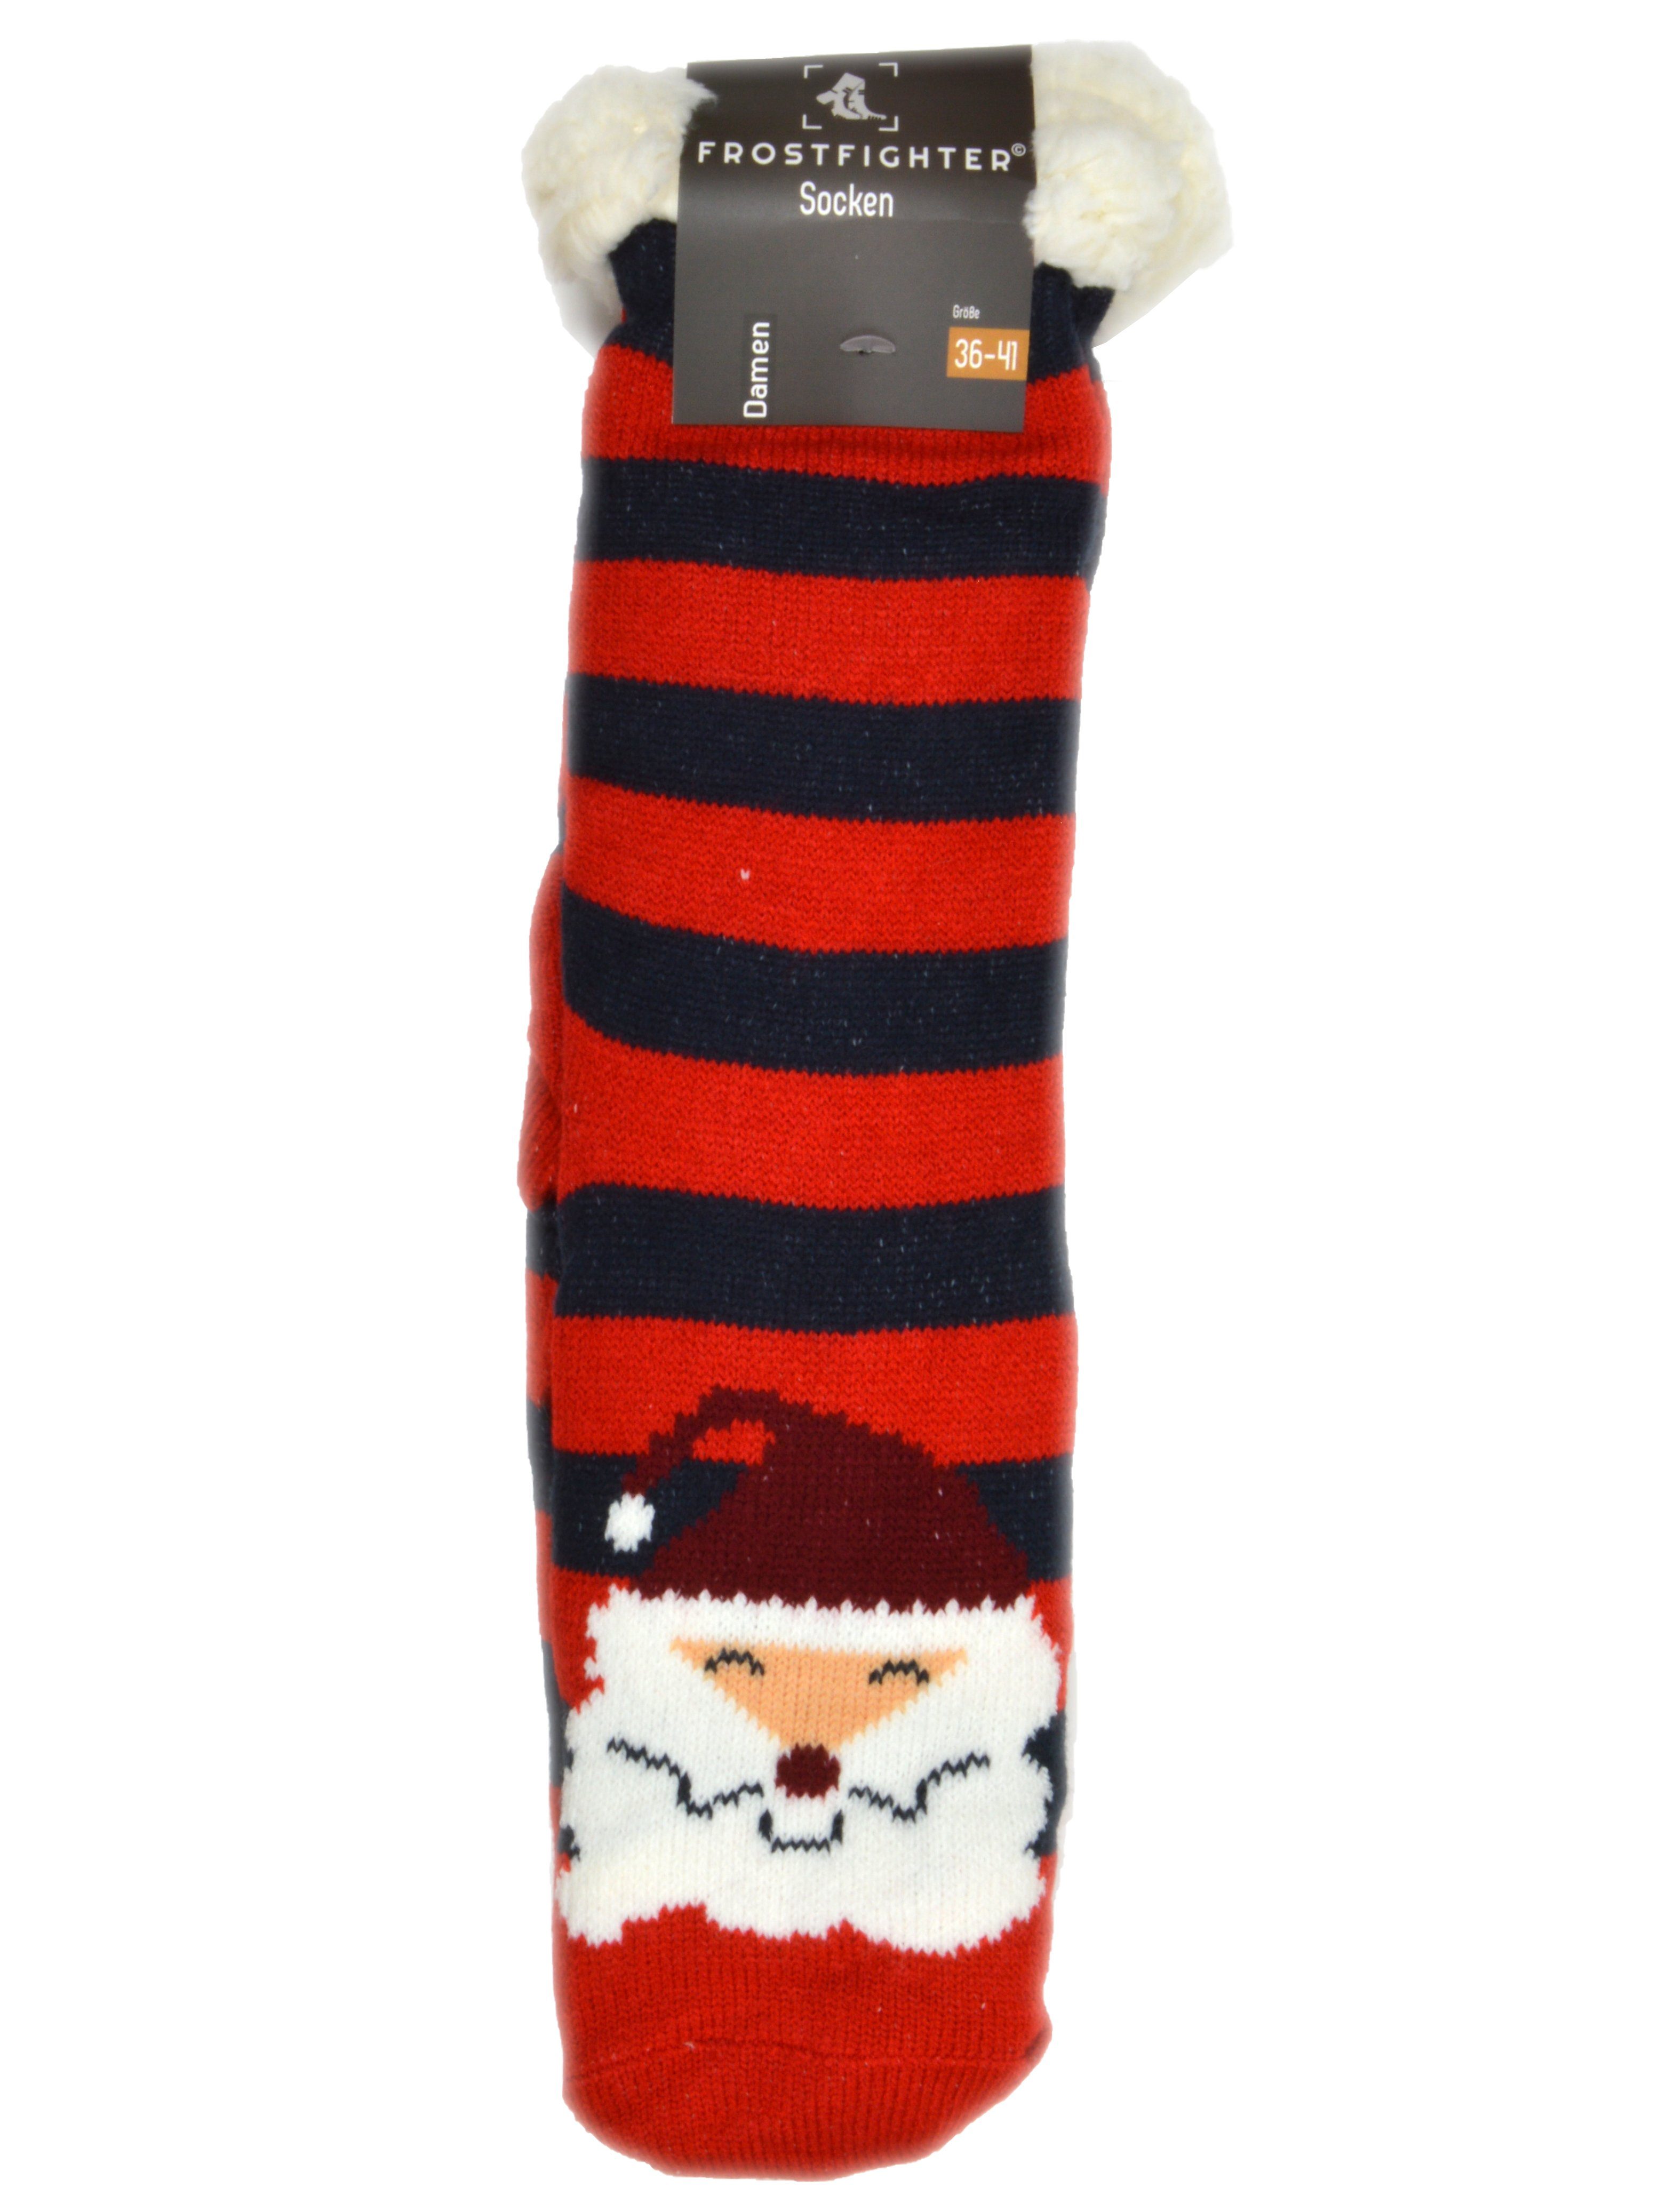 Paar) Socken Innenfutter, Weihnachtsmann - Kuschelsocken, Haussocken Rot ABS-Sohle, (1 Hüttensocken Frostfighter